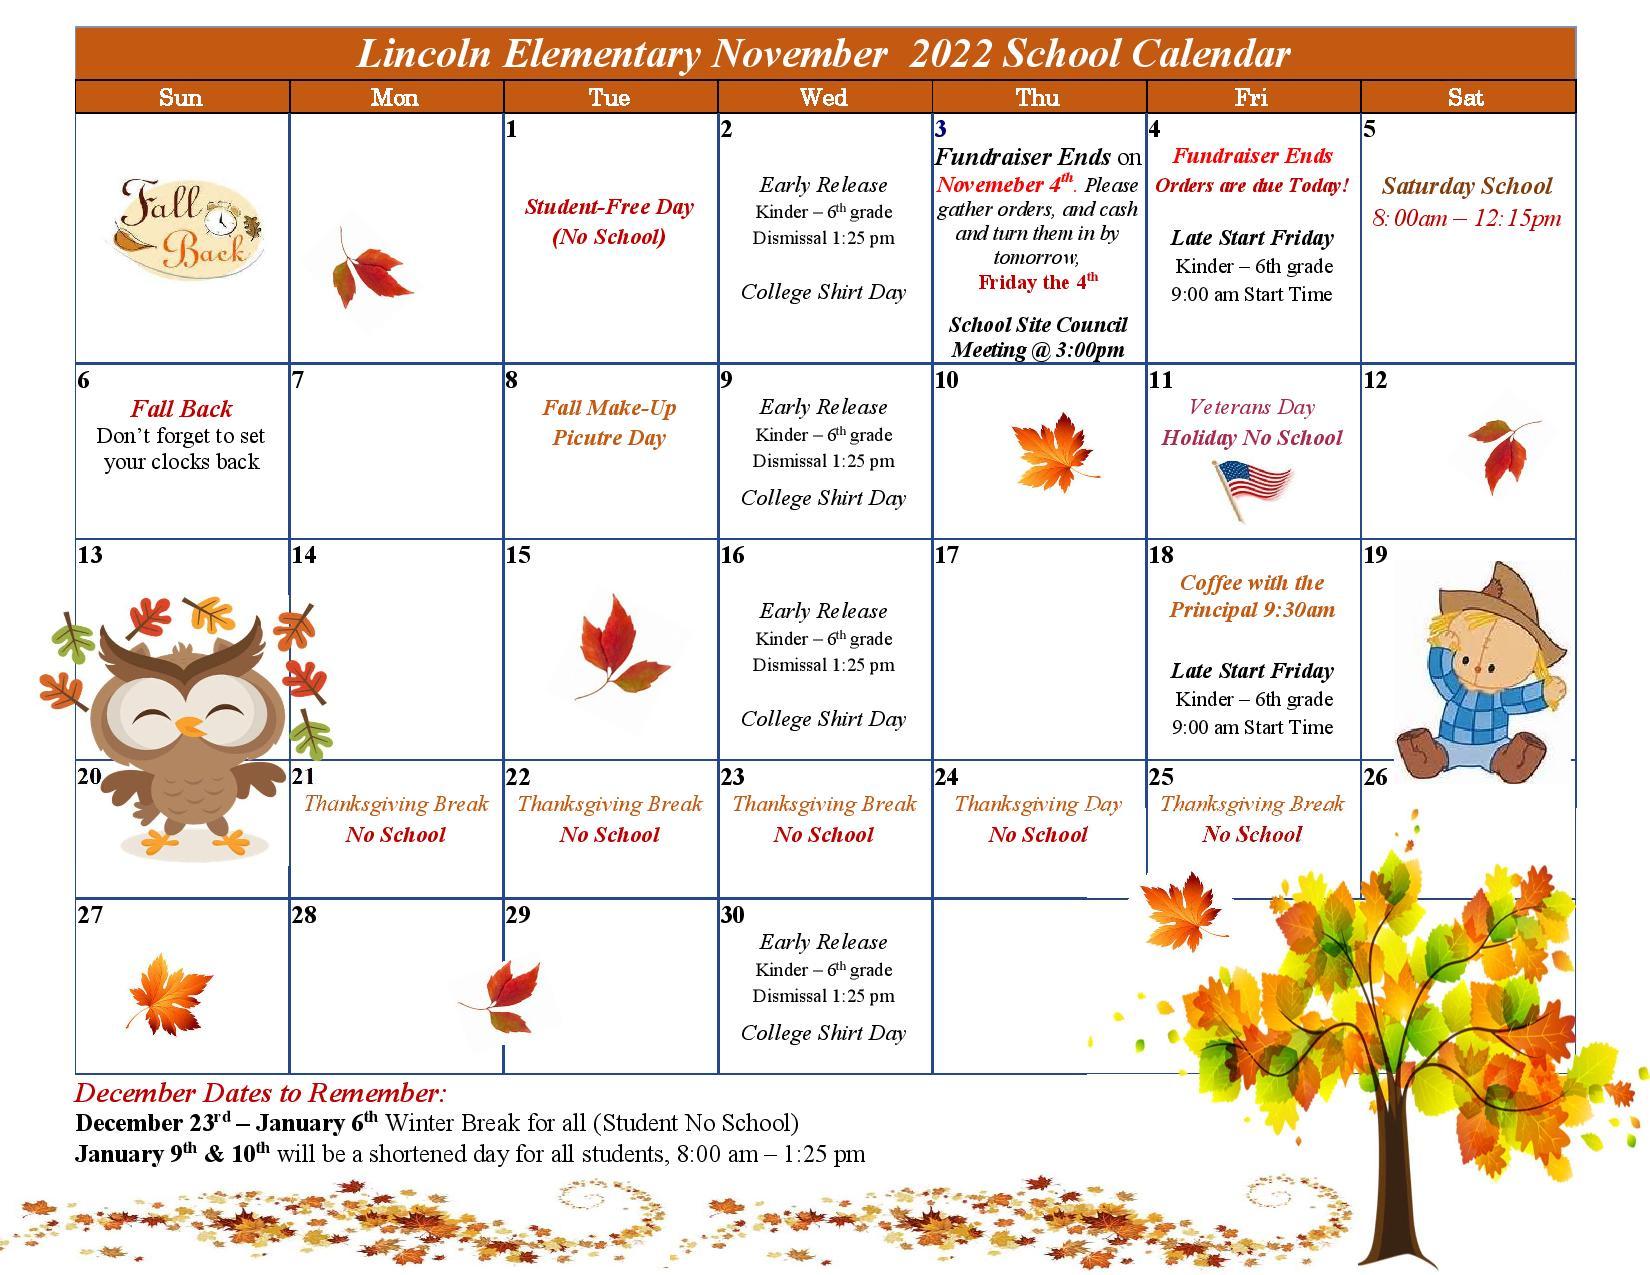 Lincoln Elementary: November School Calendar 